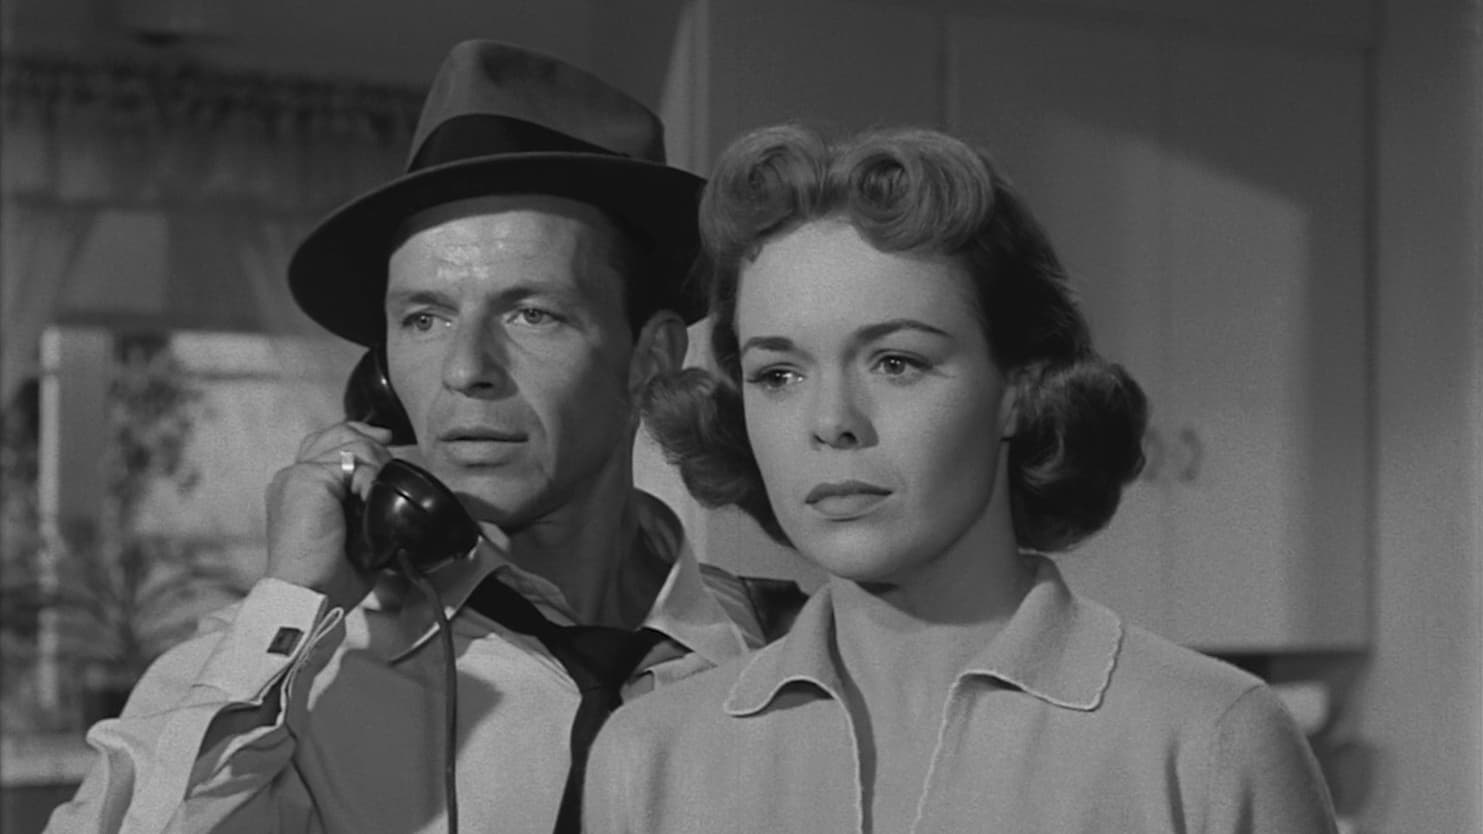 Suddenly (1954)